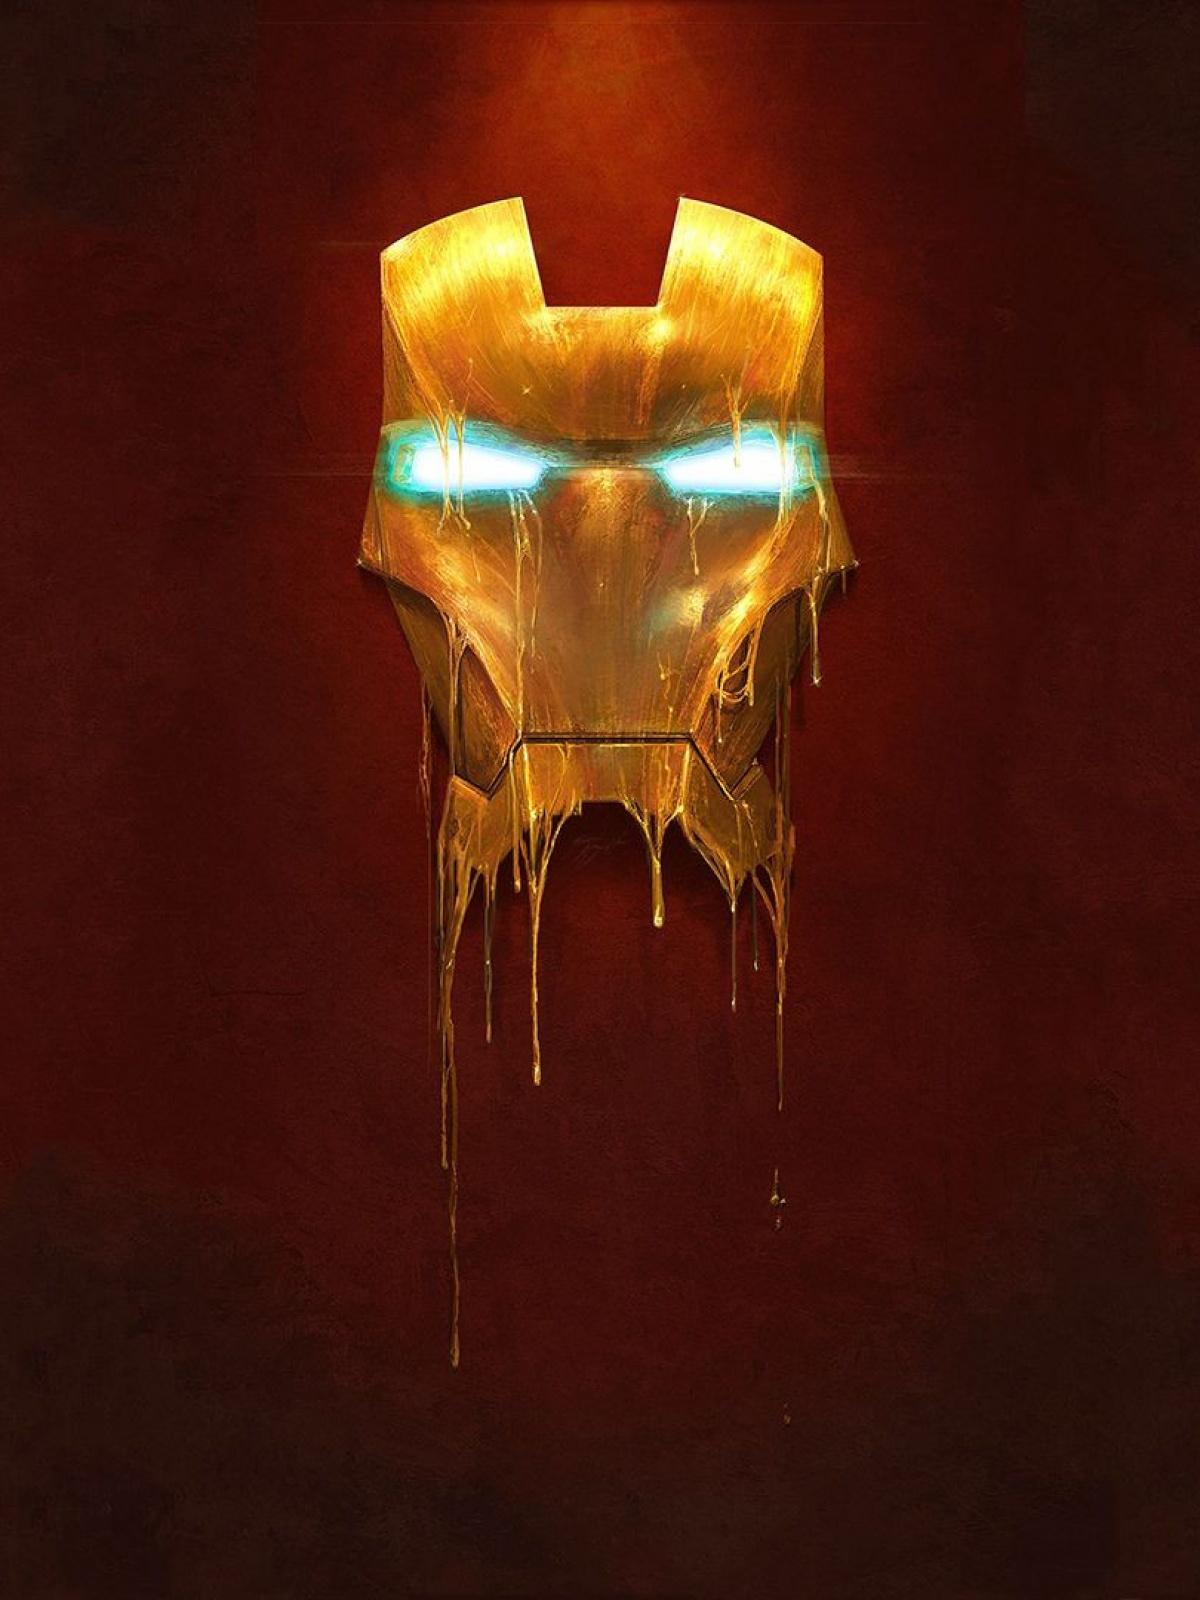 Iron Man Mobile Wallpaper